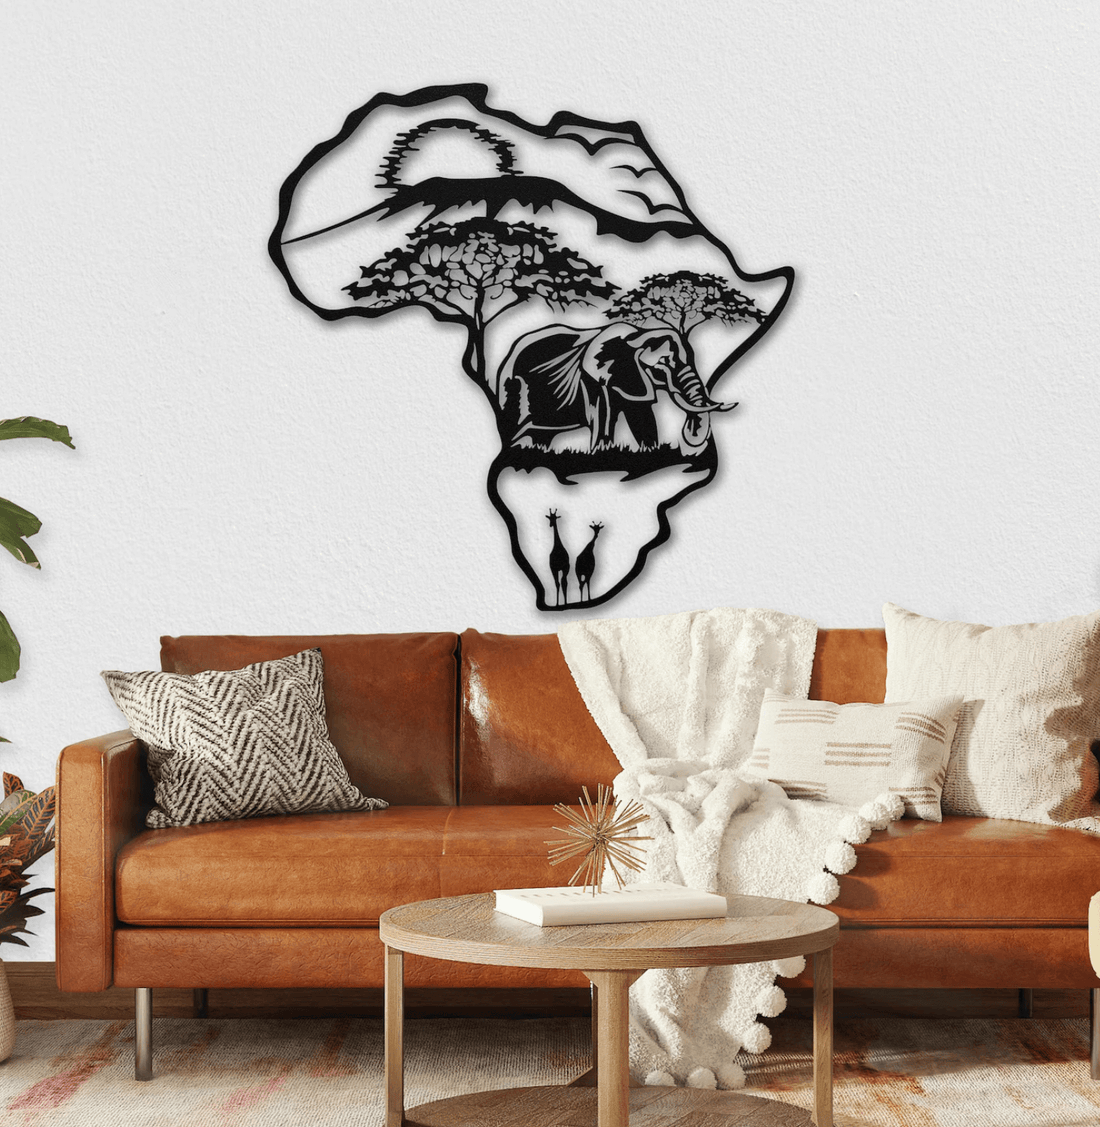 Africa in Africa Metal Wall Art - S (600mm 600mm) / Black